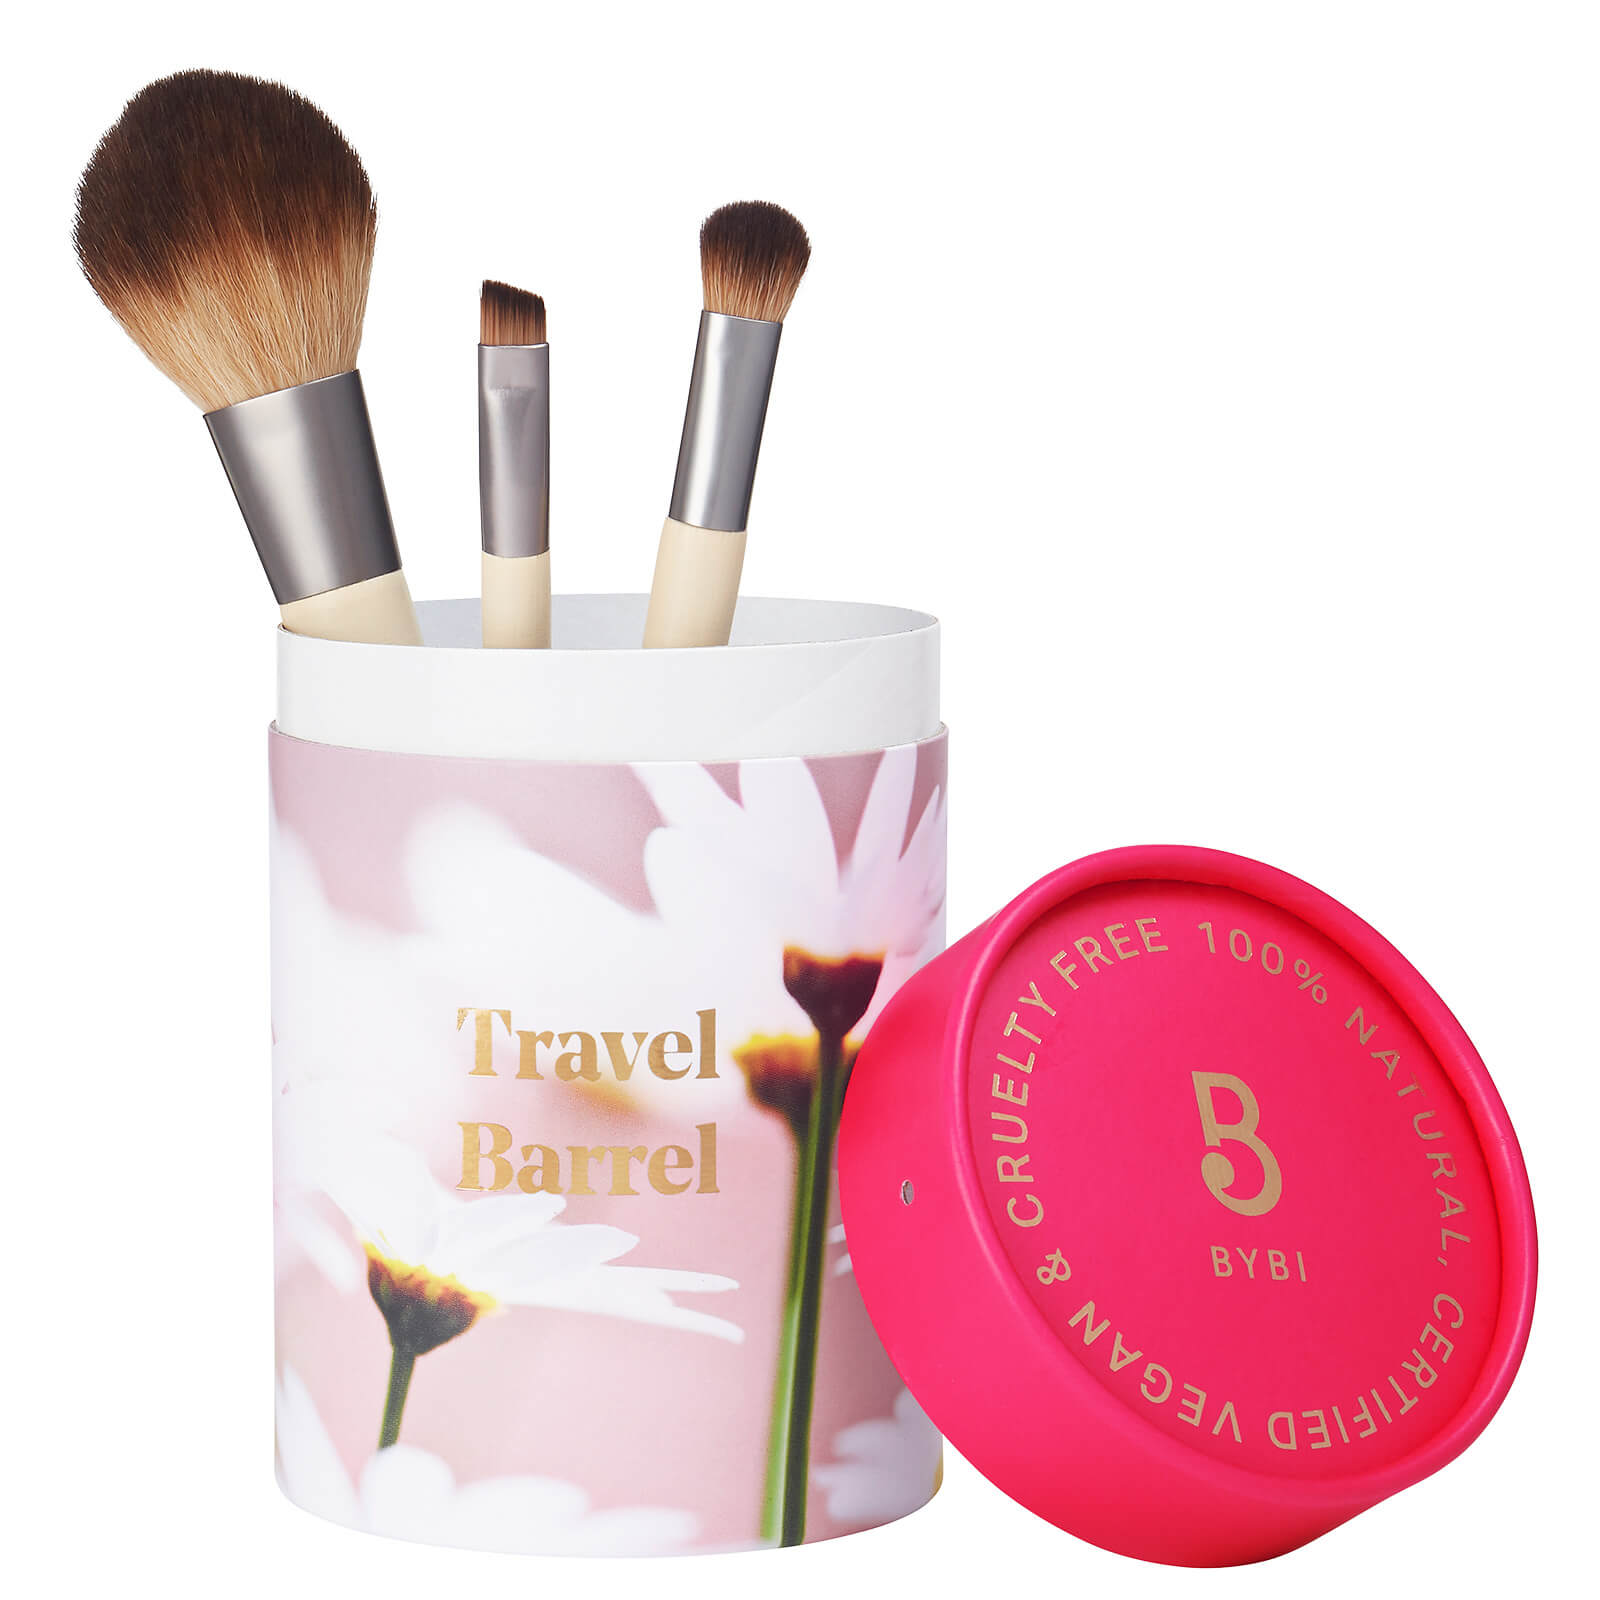 BYBI Beauty Travel Barrel Brushed Set (Worth £24.00)